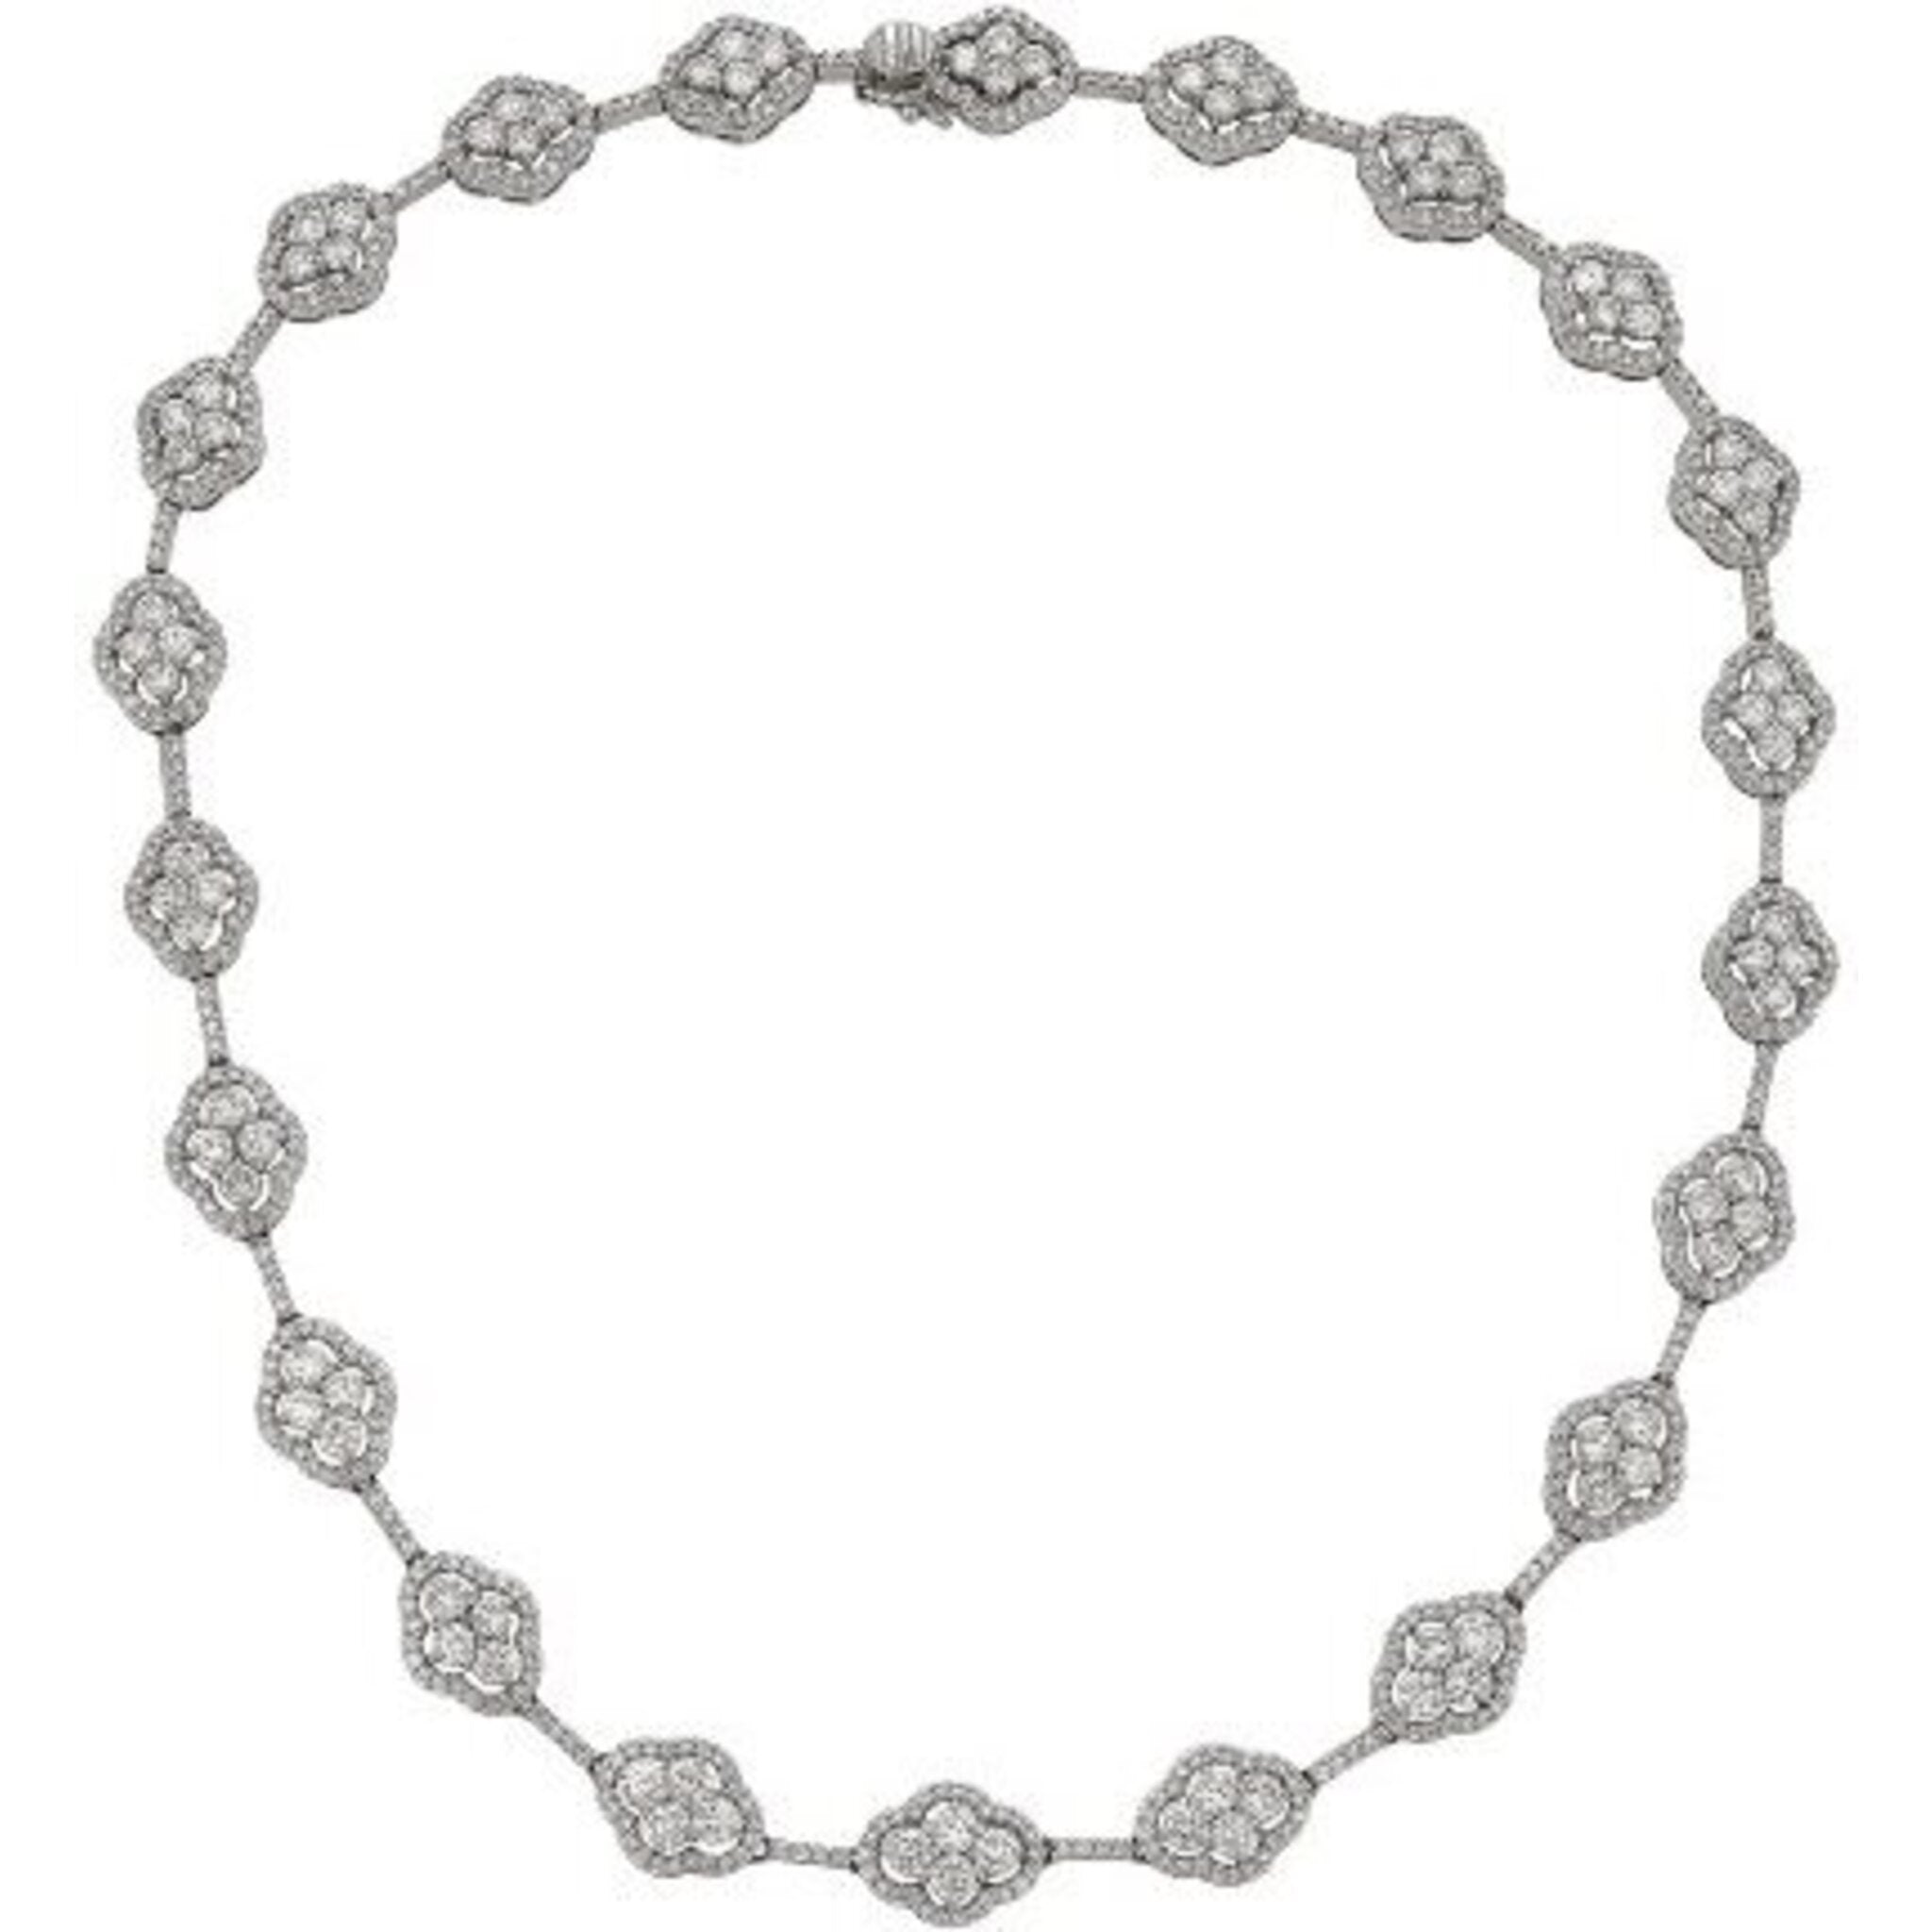 Piranesi - Pacha Necklace in Diamond - 18K White Gold